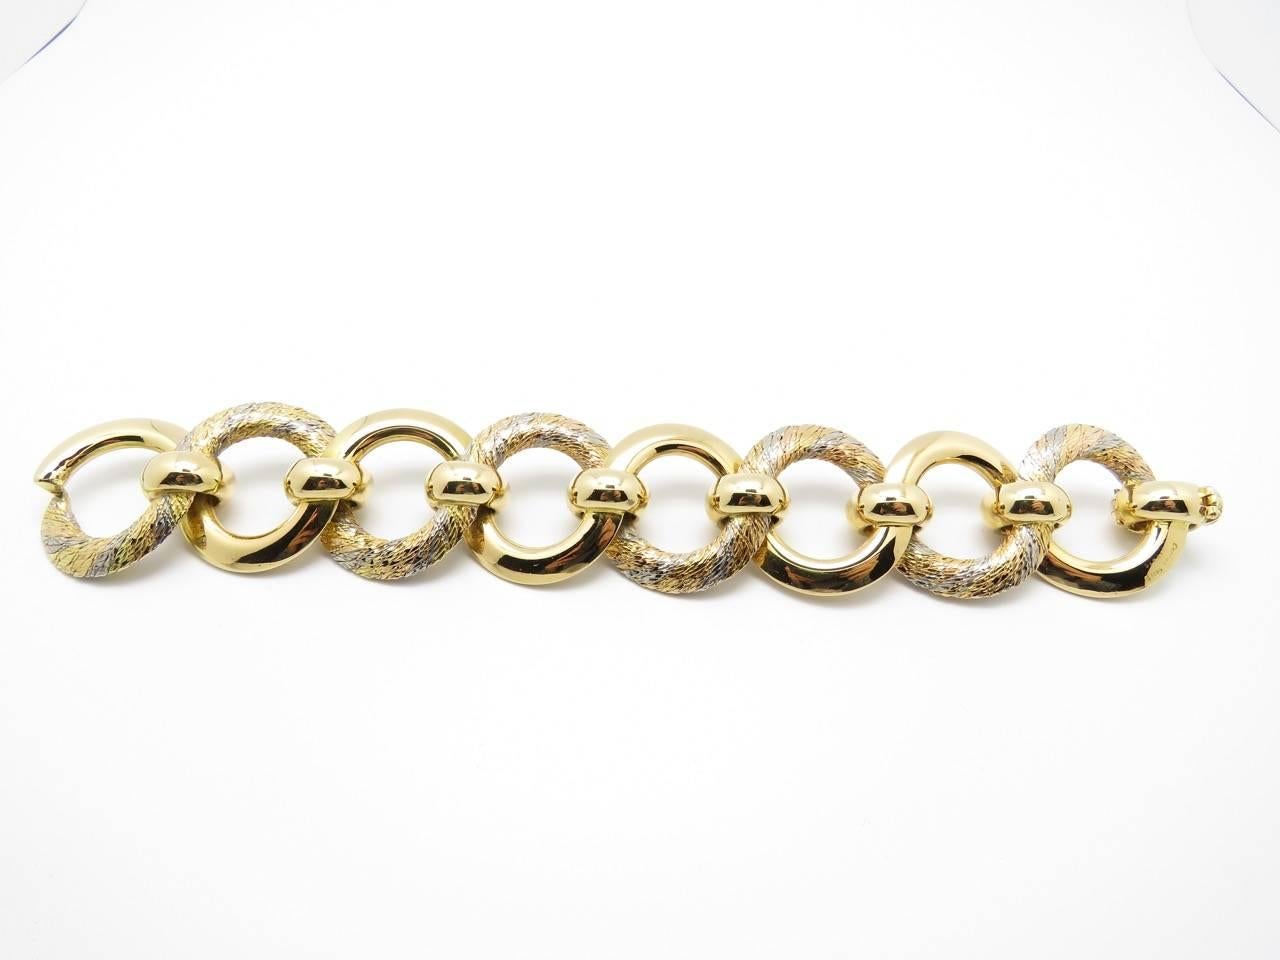 1970s Cartier Paris Three Tone Gold Link Bracelet.
18 Karat gold bracelet.
Rose Gold
White Gold
Yellow Gold
Signed 